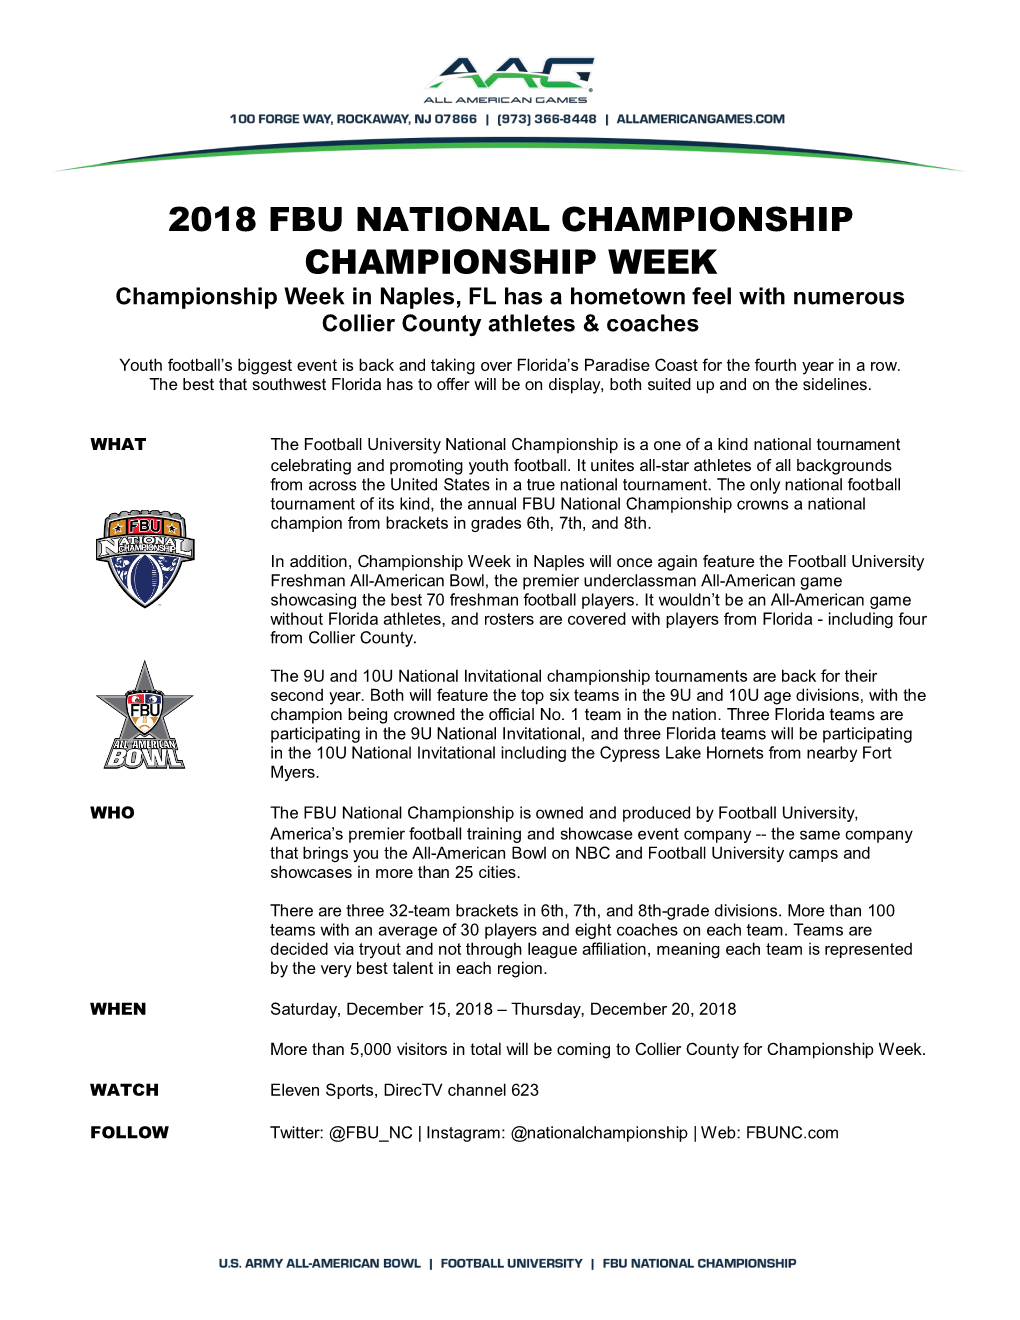 FBU Championship Week Event Press Release 2018